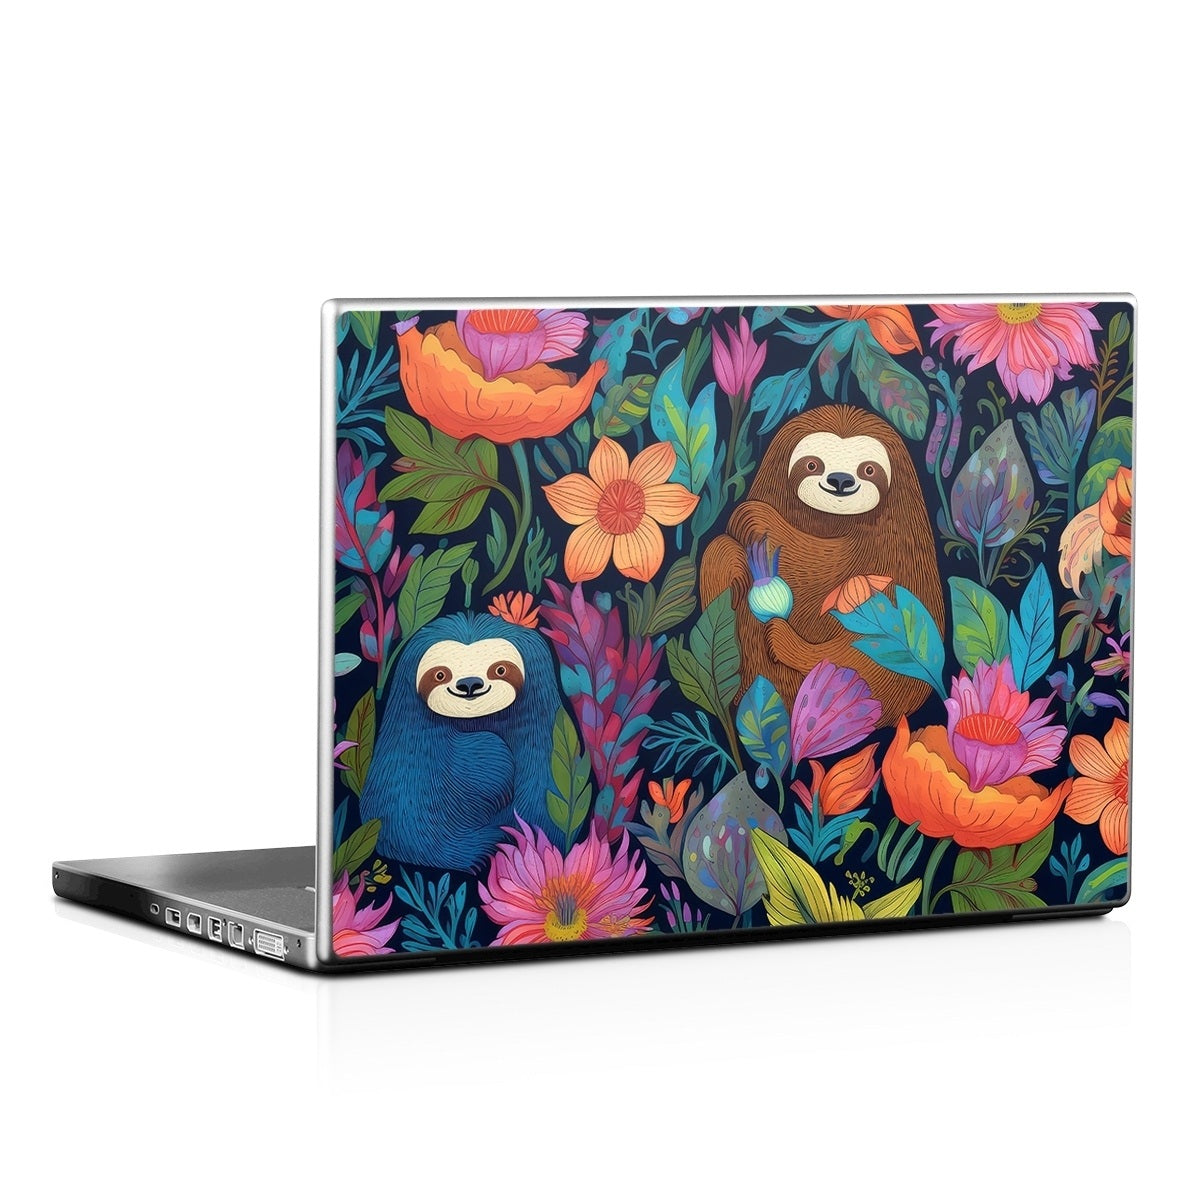 Garden of Slothy Delights - Laptop Lid Skin